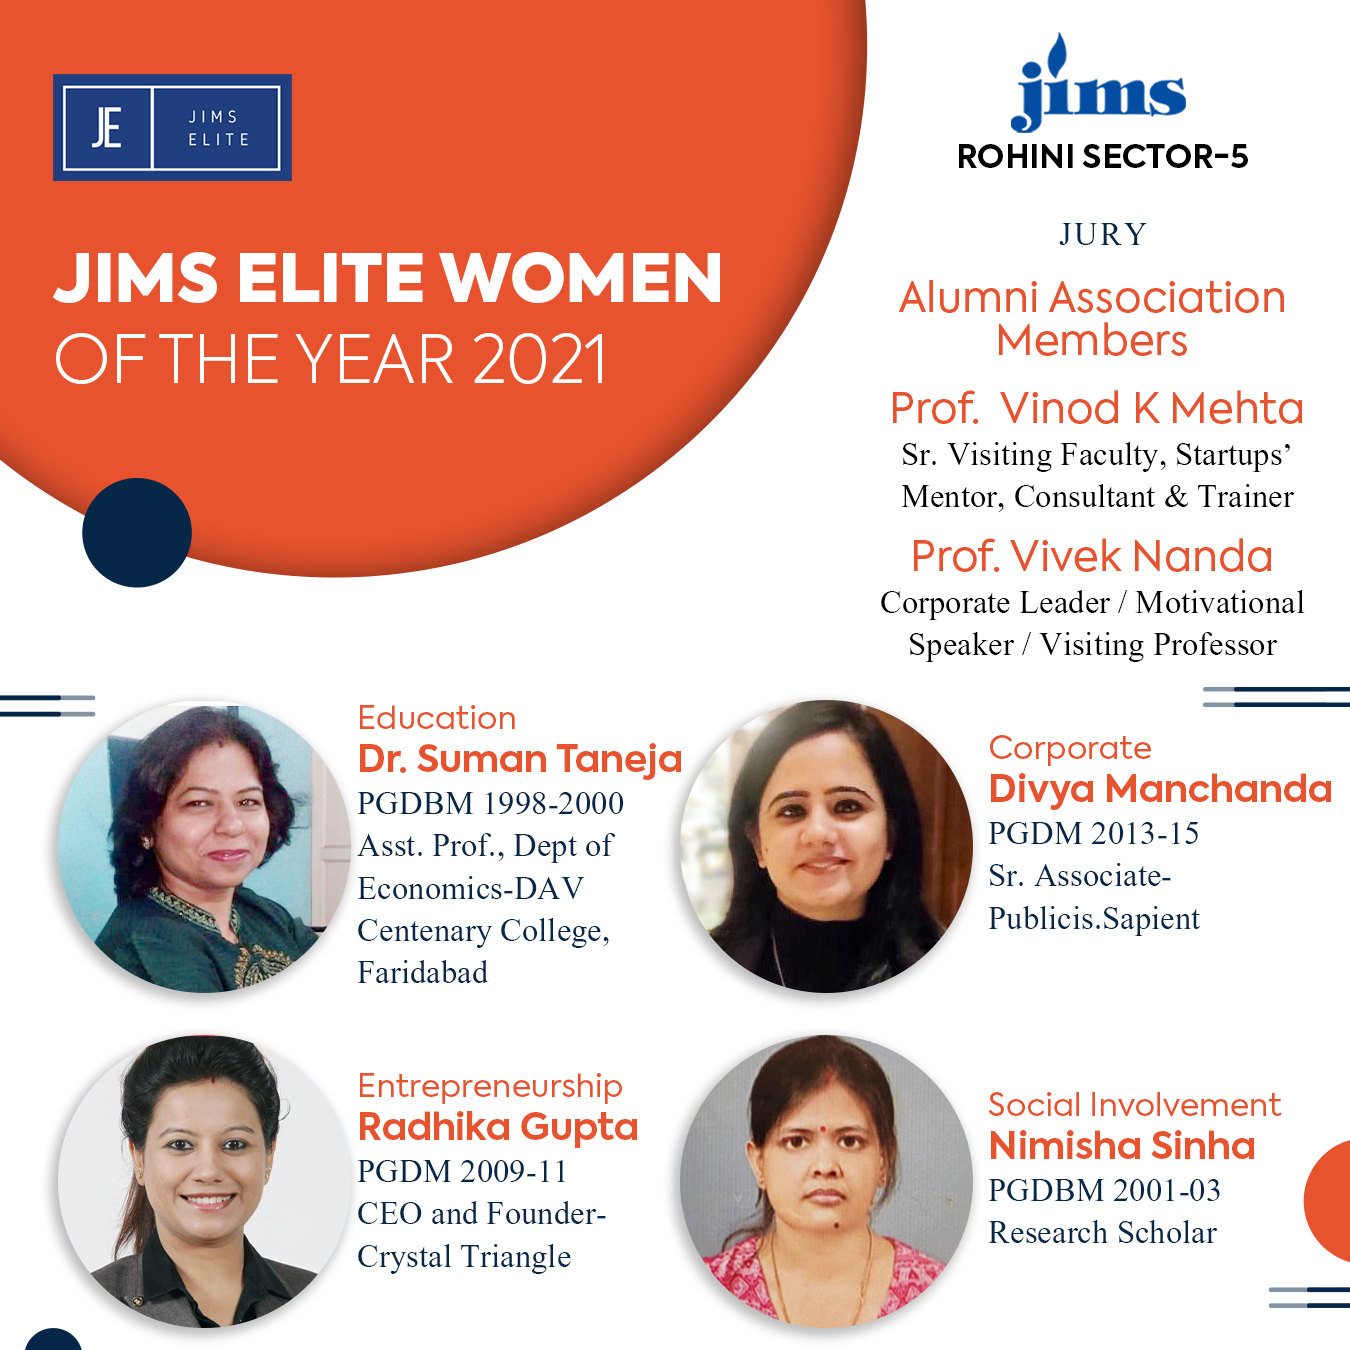 jims-elite-women-of-the-year-2021.jpg